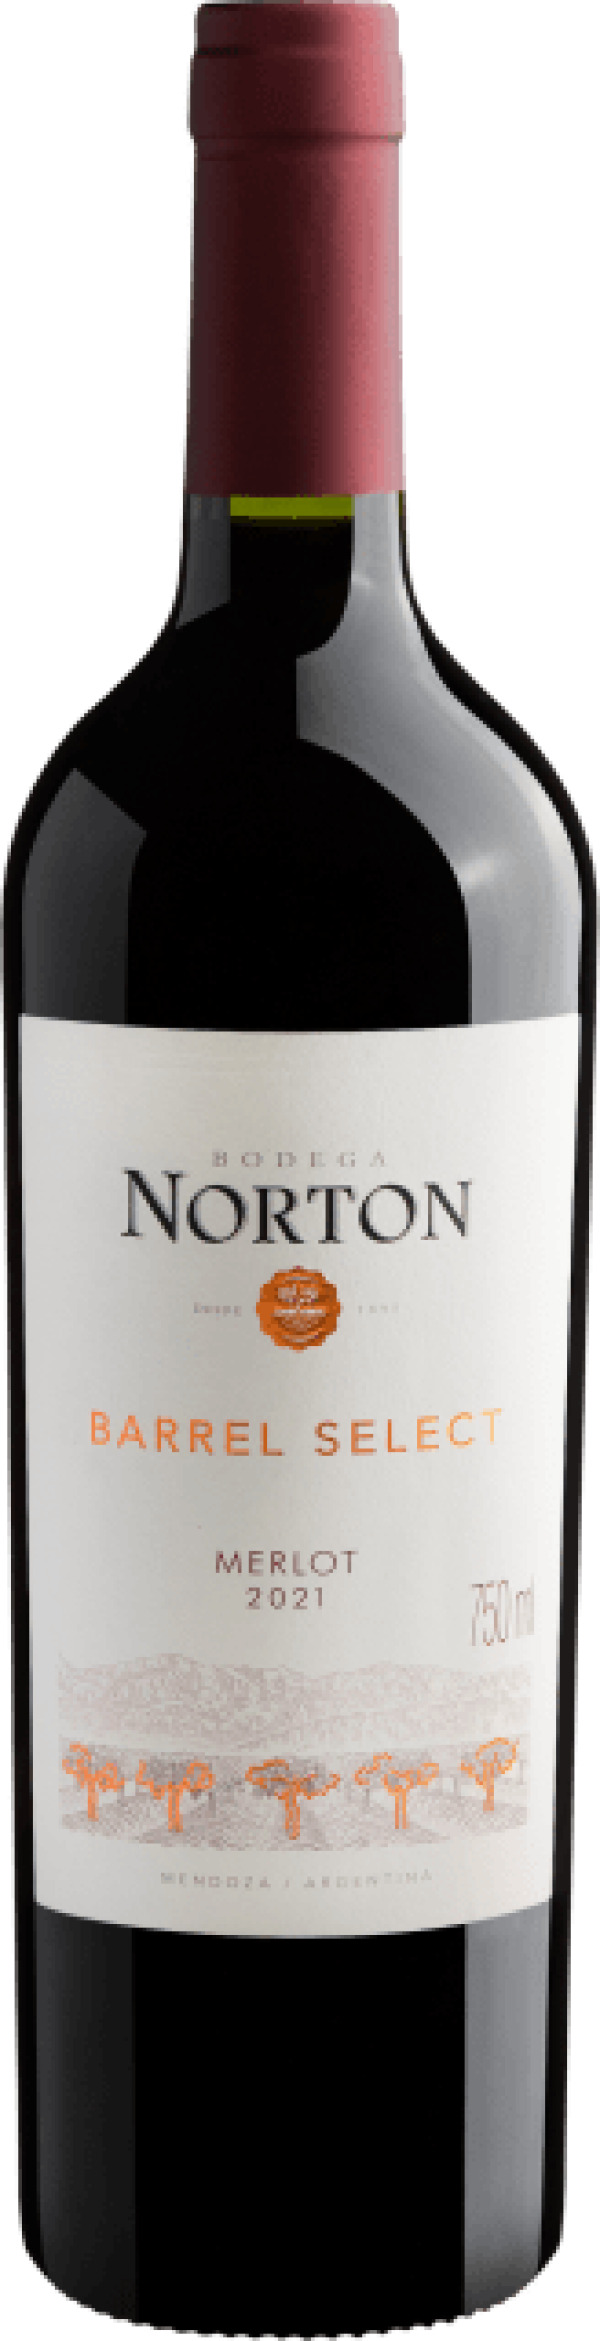 Bodega Norton Barrel Select Merlot 2021